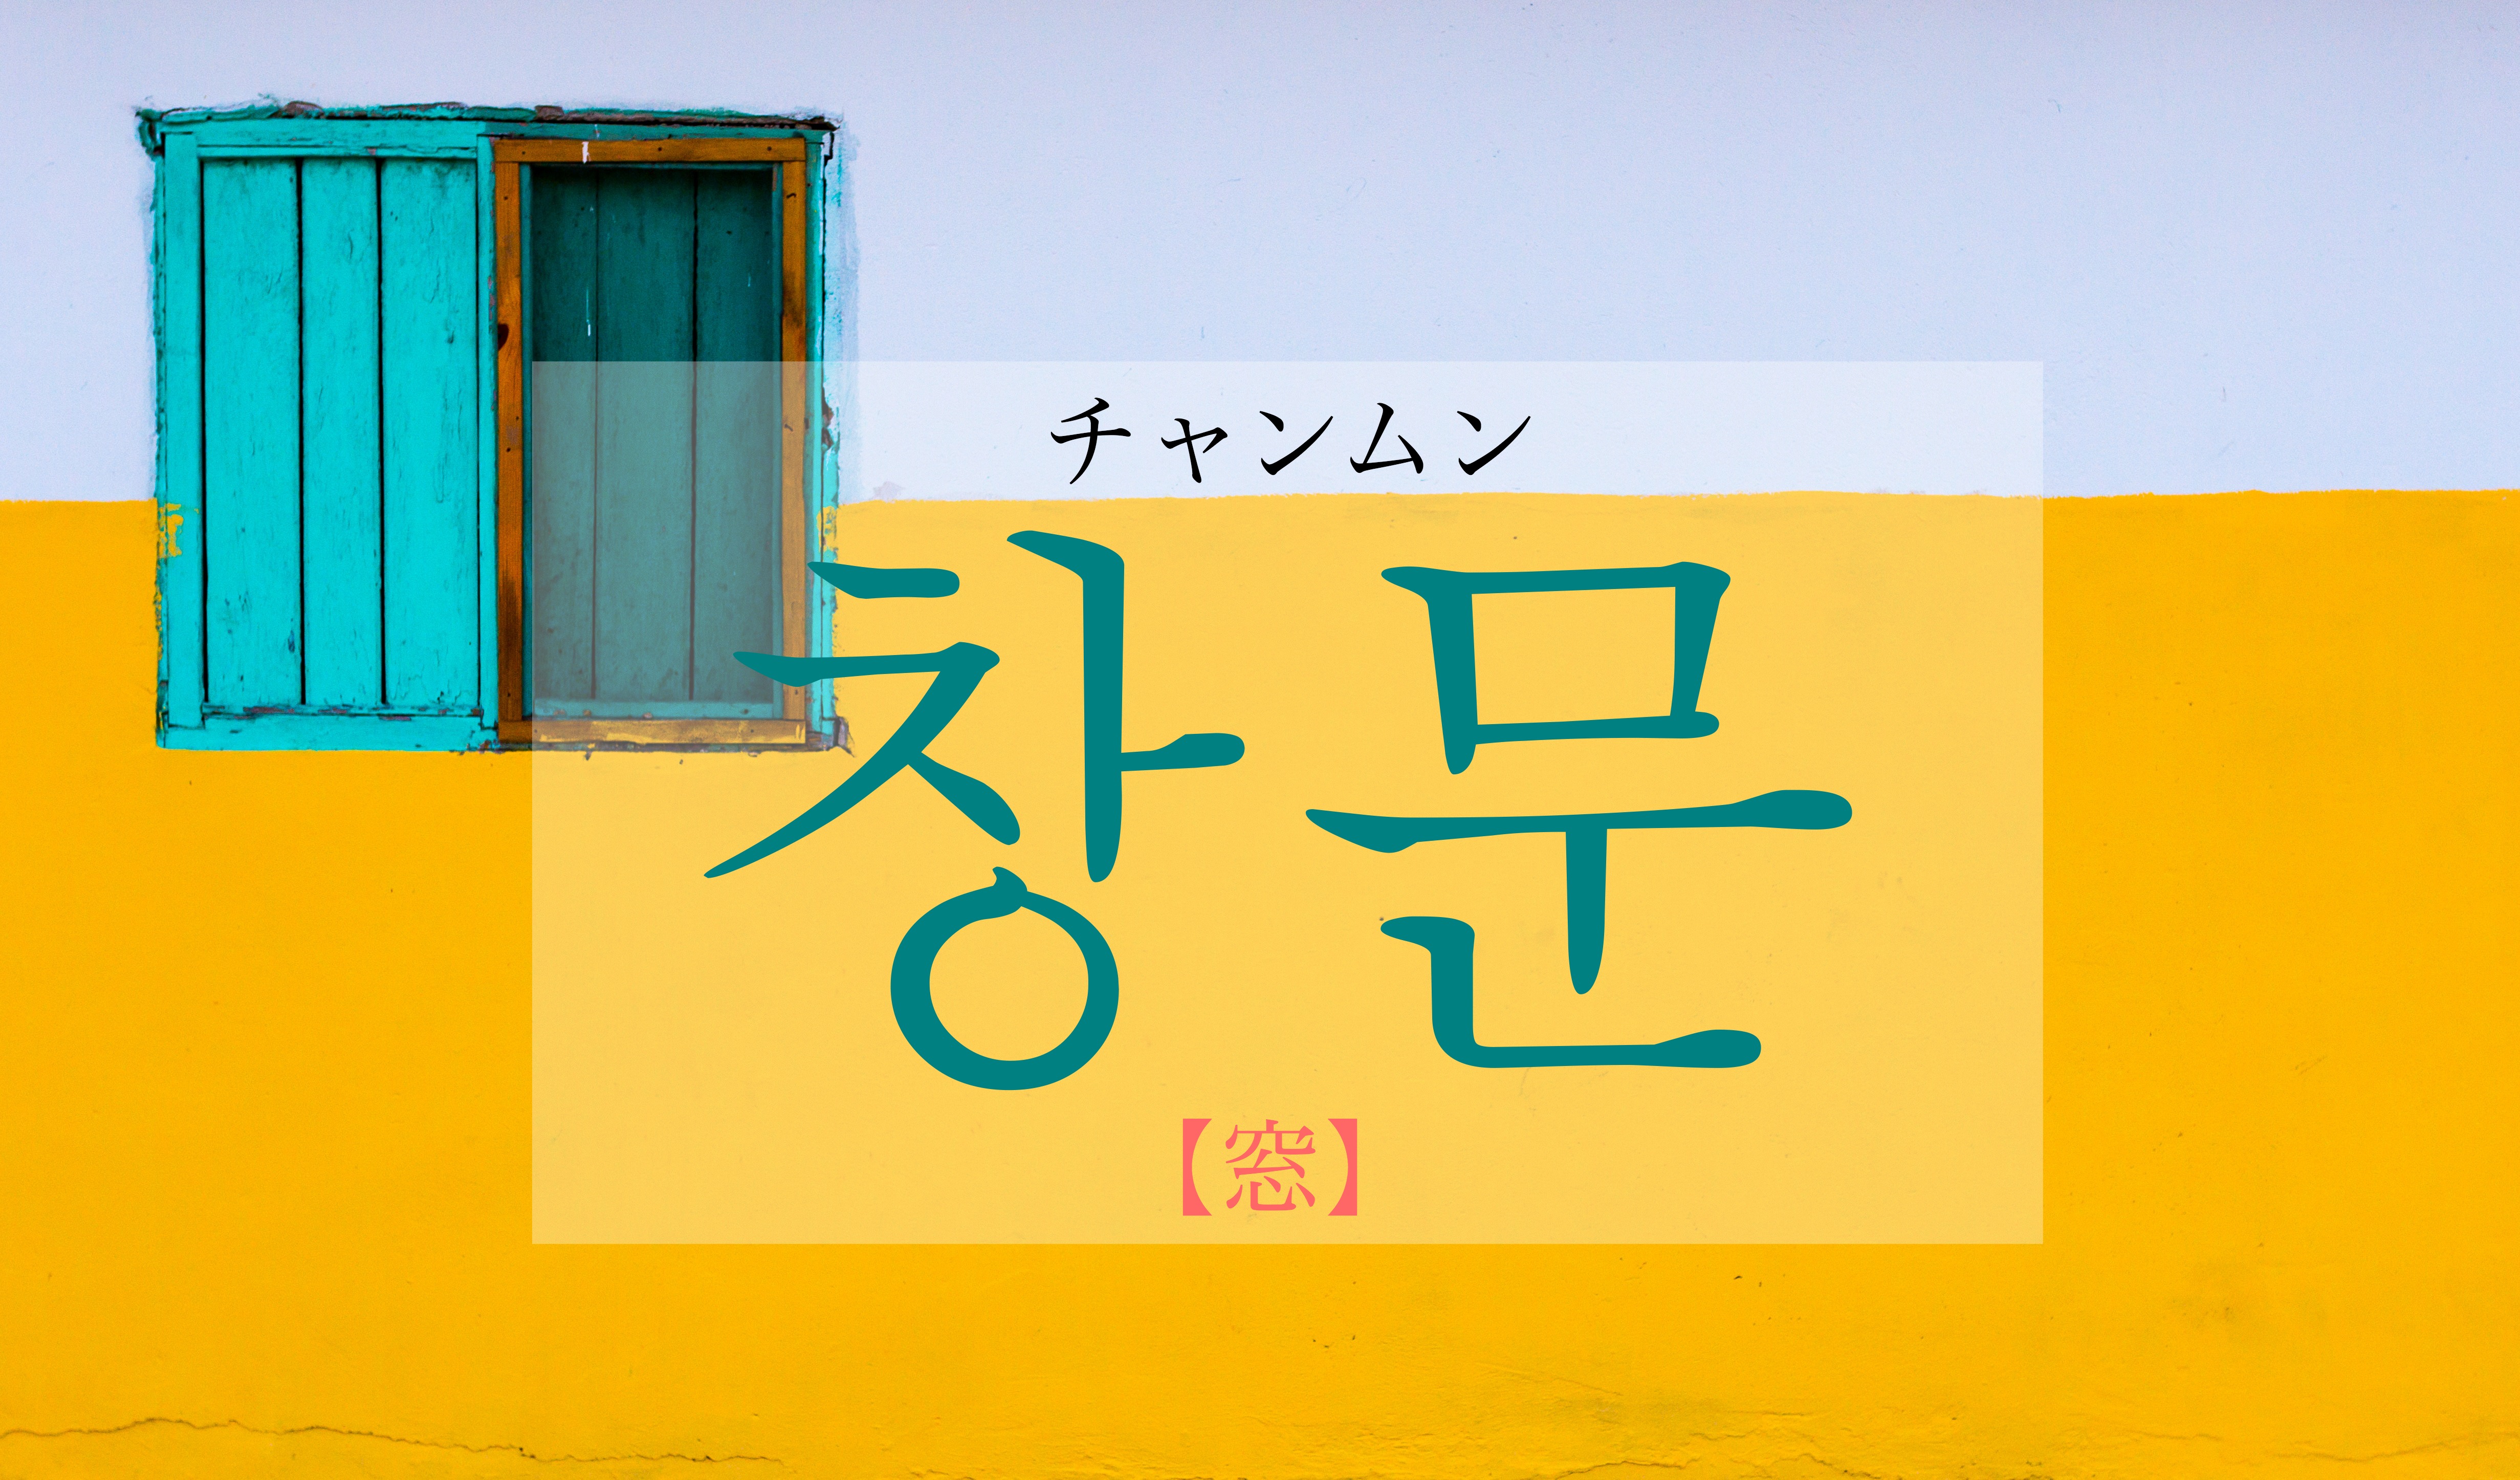 koreanword-window